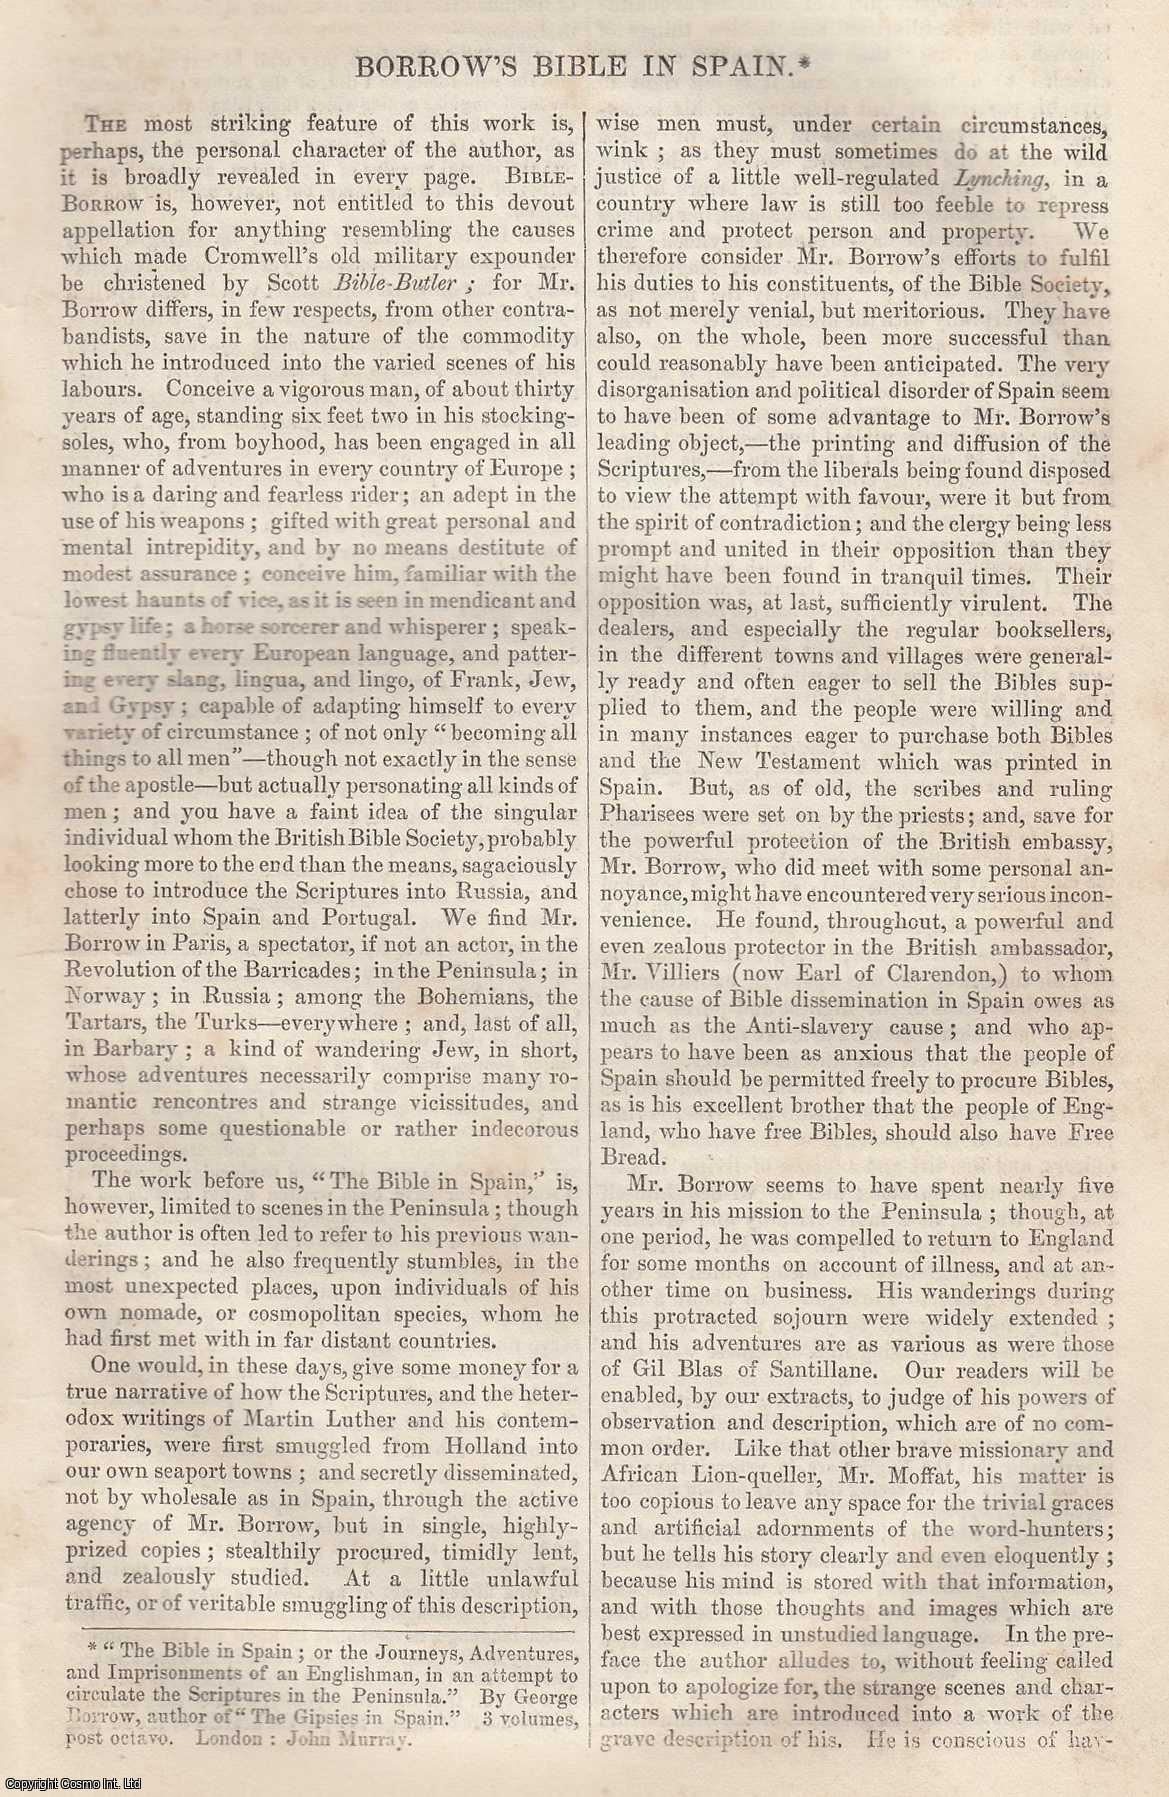 Johnstone, Christian - Borrow's Bible in Spain (Part 1). An original article from Tait's Edinburgh Magazine, 1843.